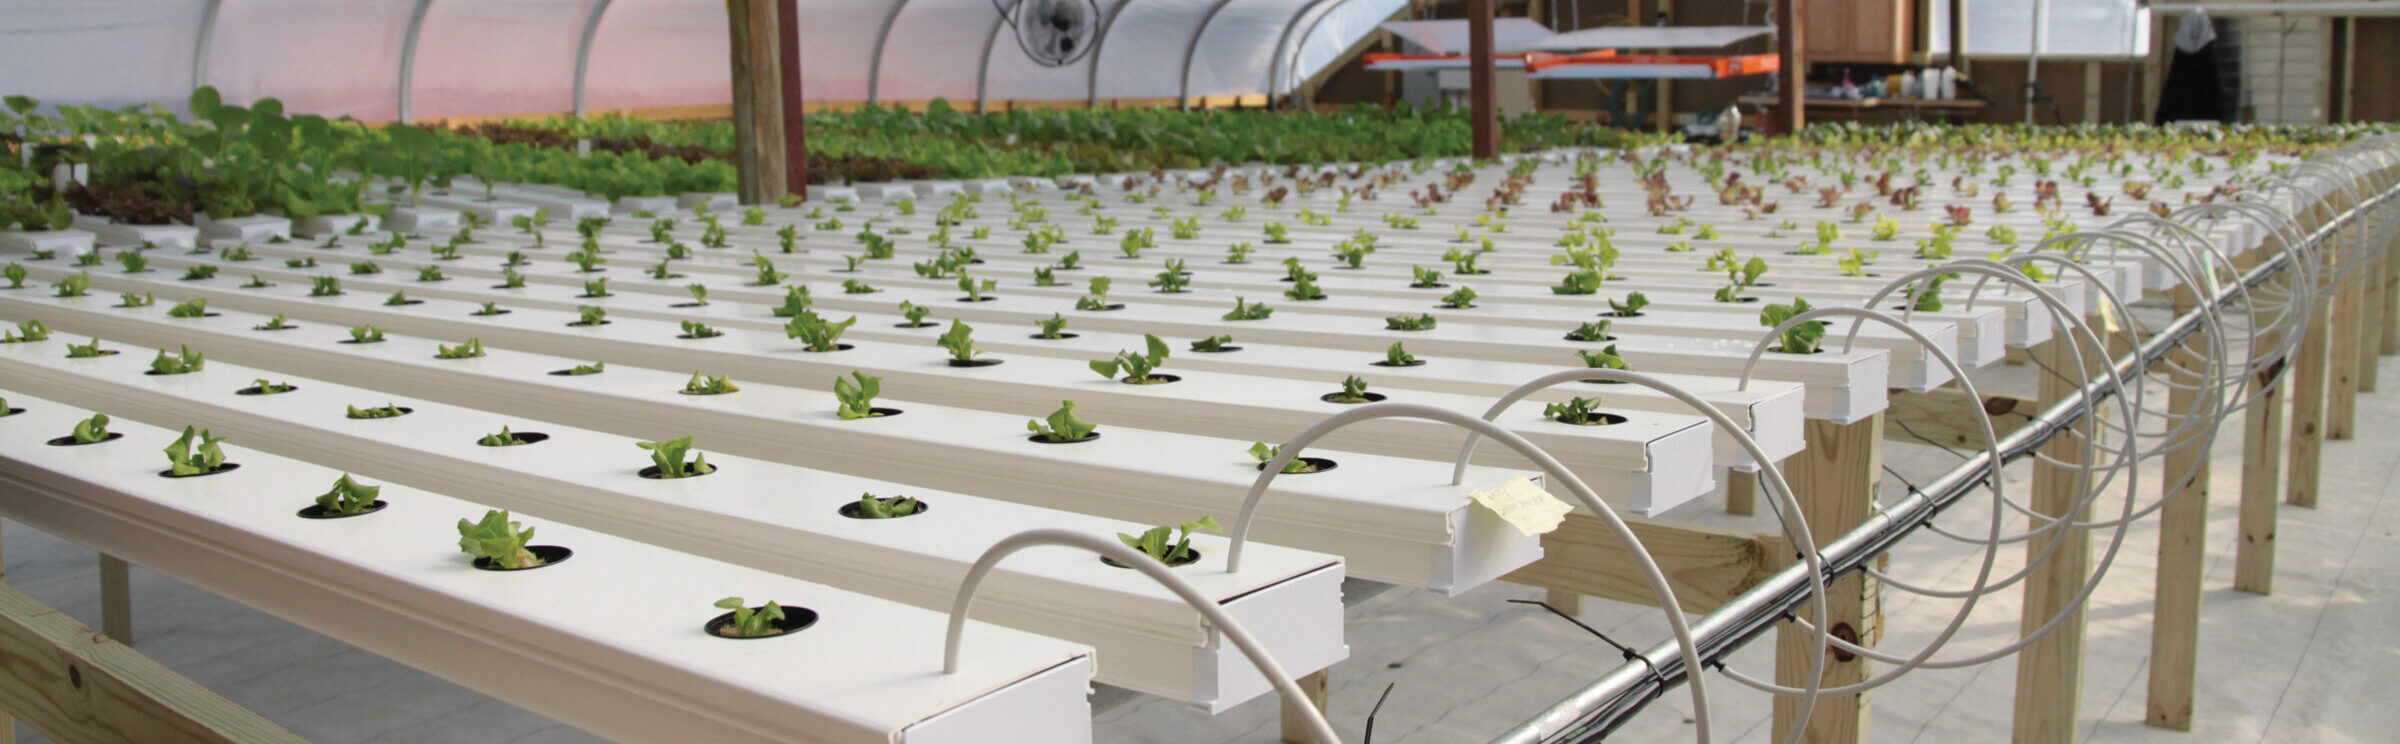 NFT hydroponic garden system inside greenhouse